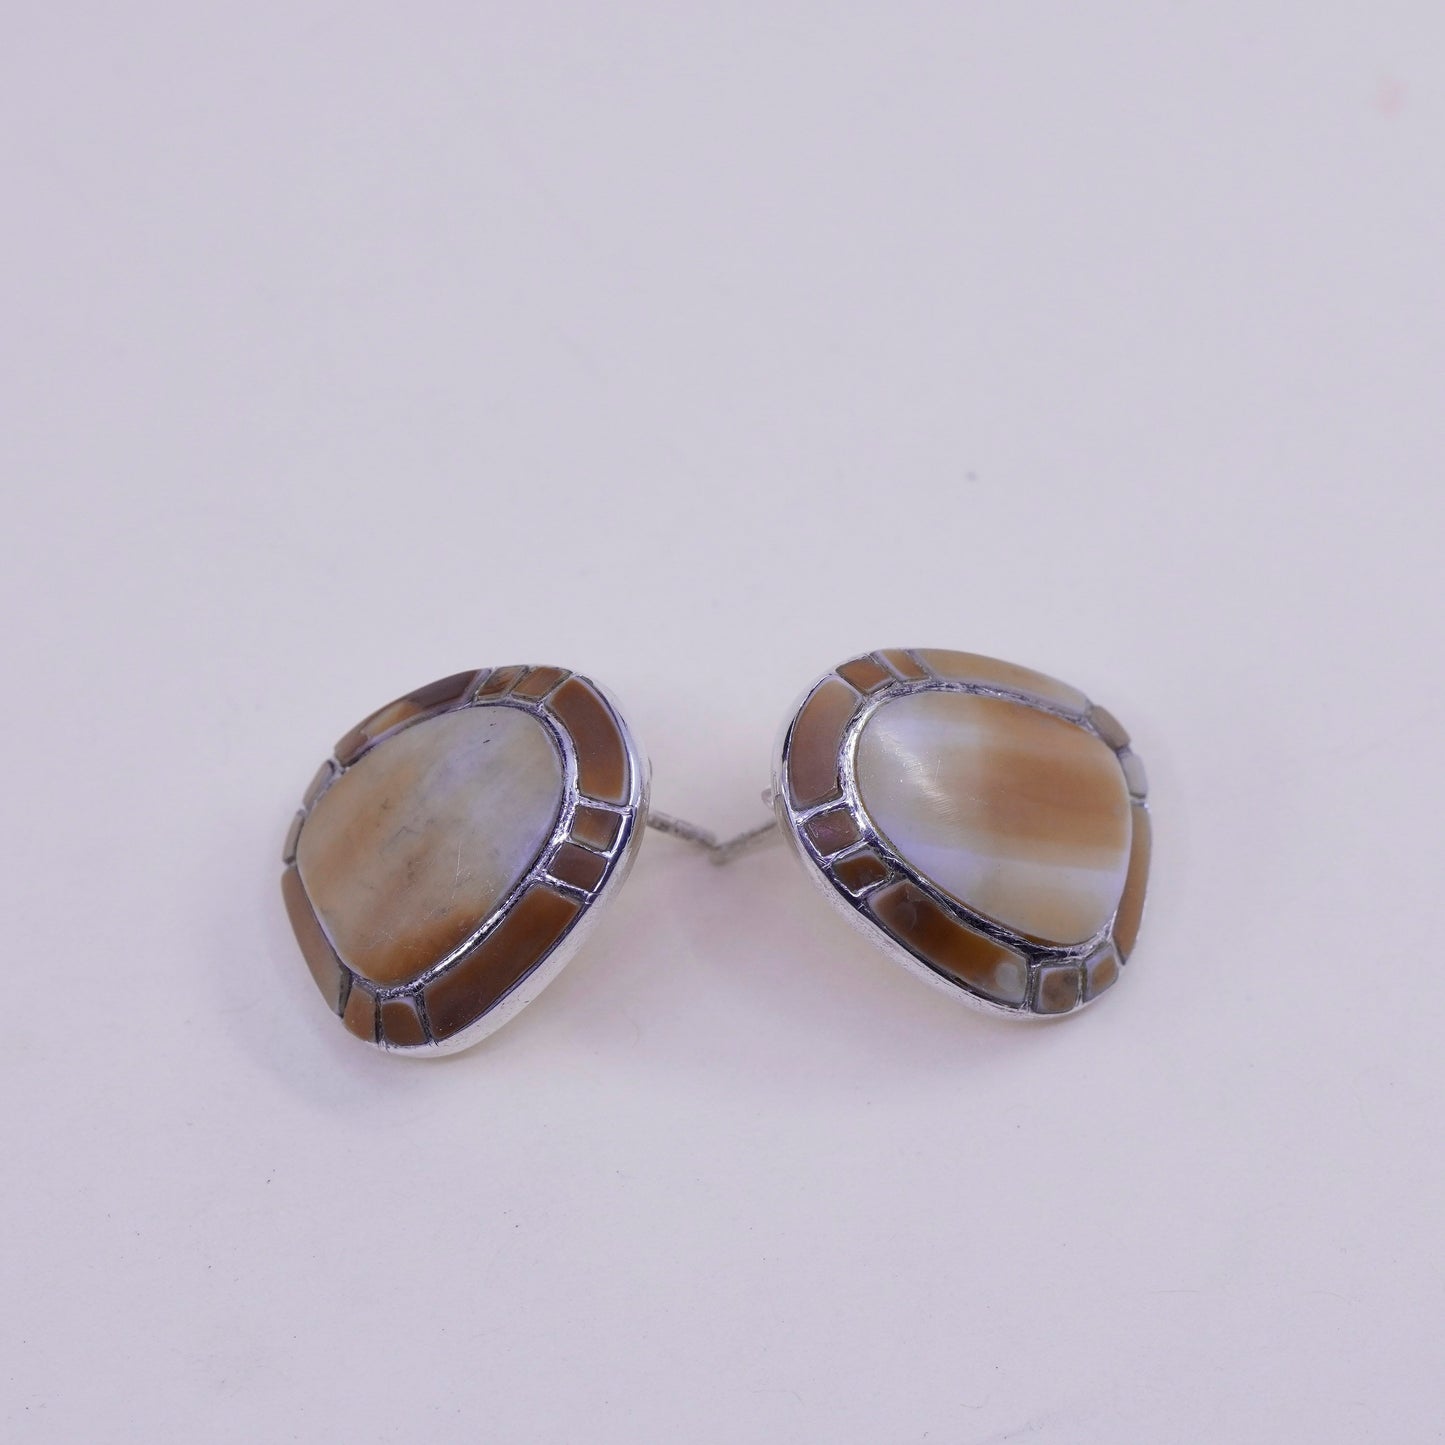 Vintage peyote bird sterling 925 silver handmade studs earrings with shell